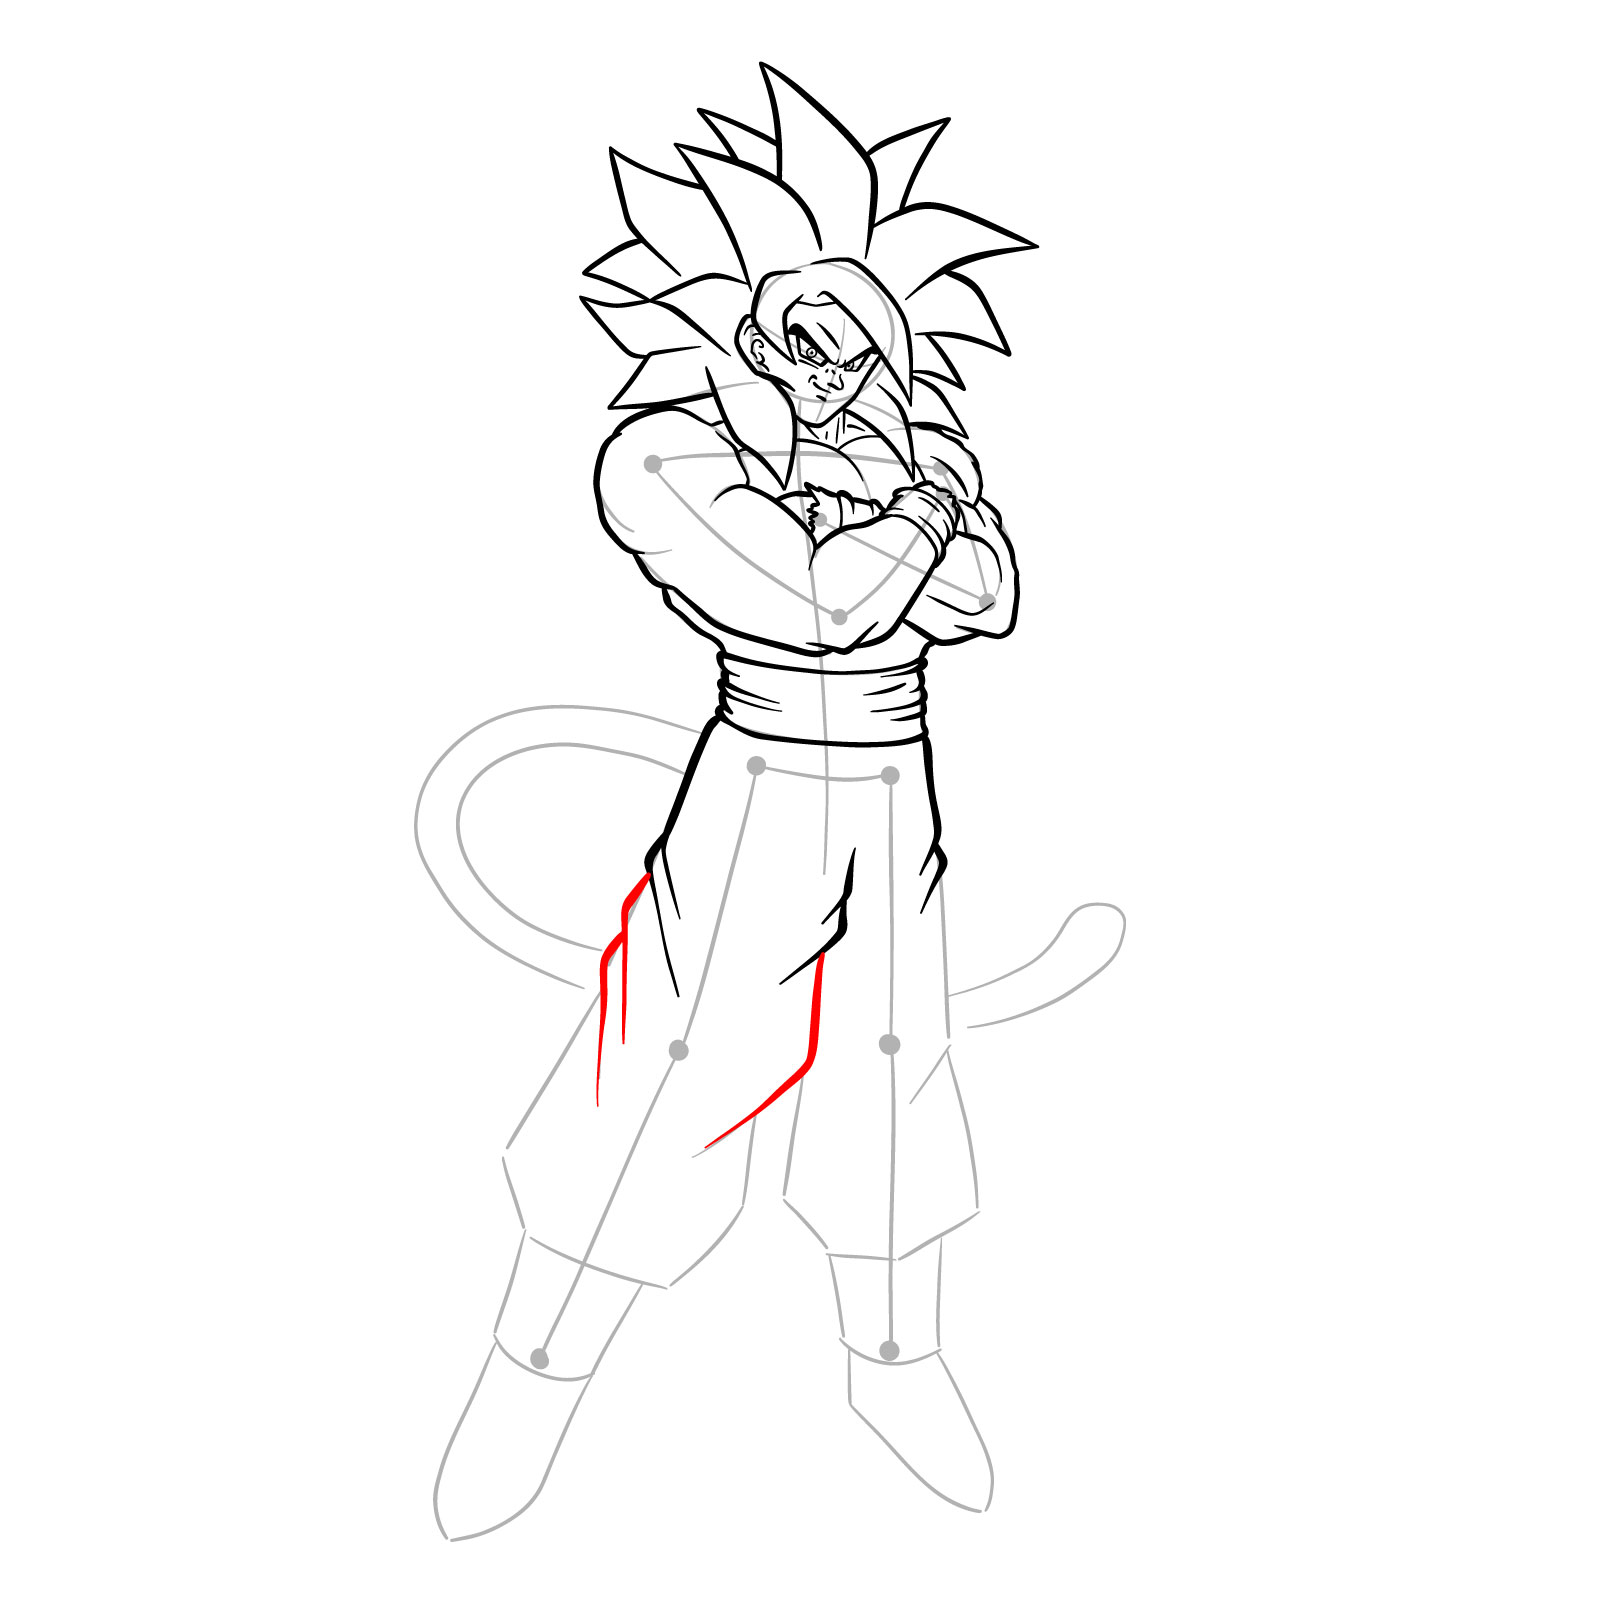 How to tát draw Goku Super Saiyan 4 - step 24